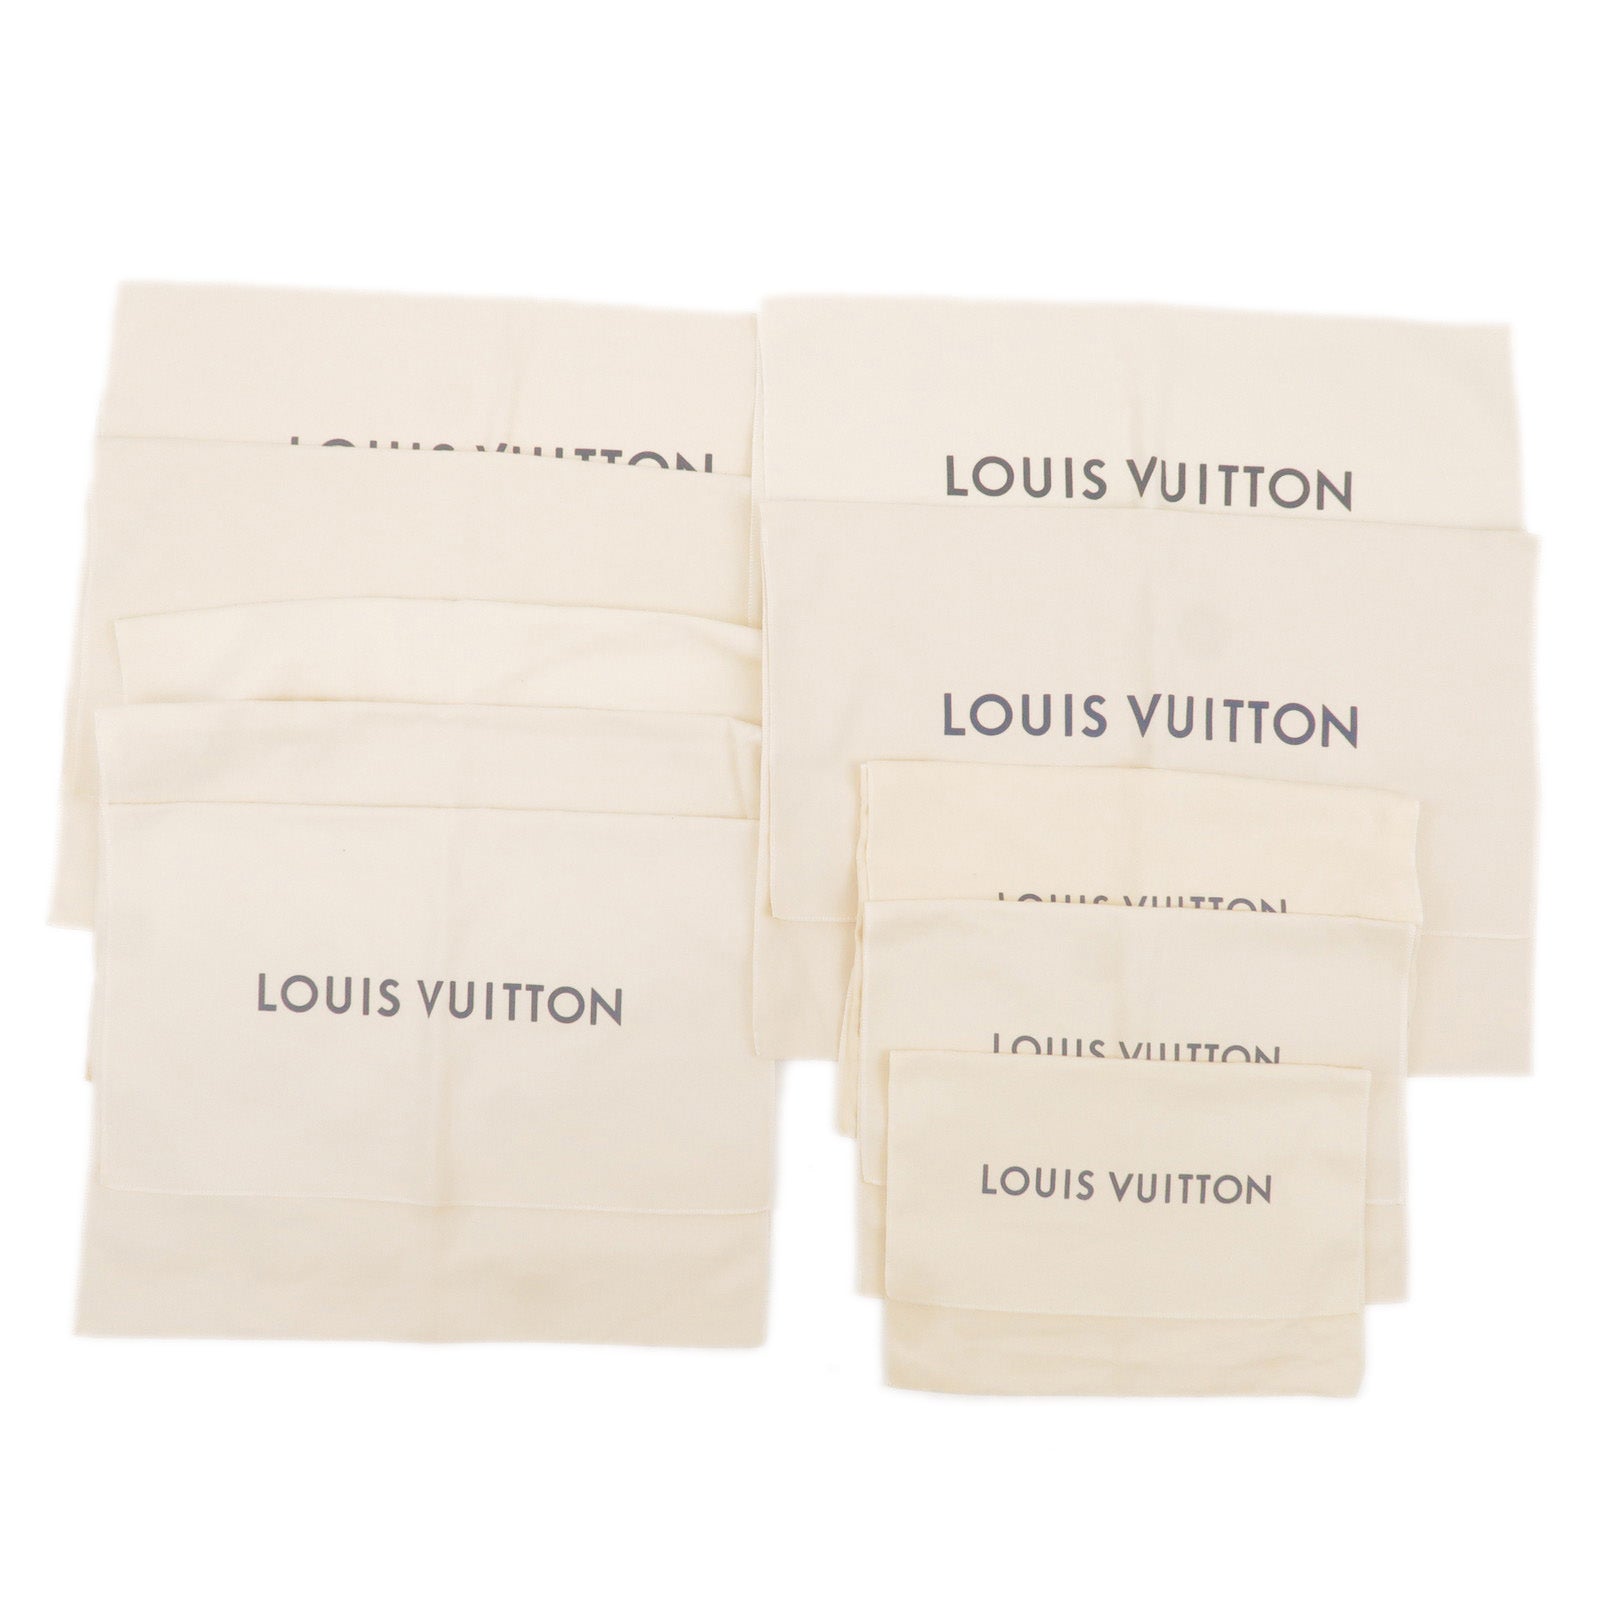 Dustbag Louis Vuitton Storage 